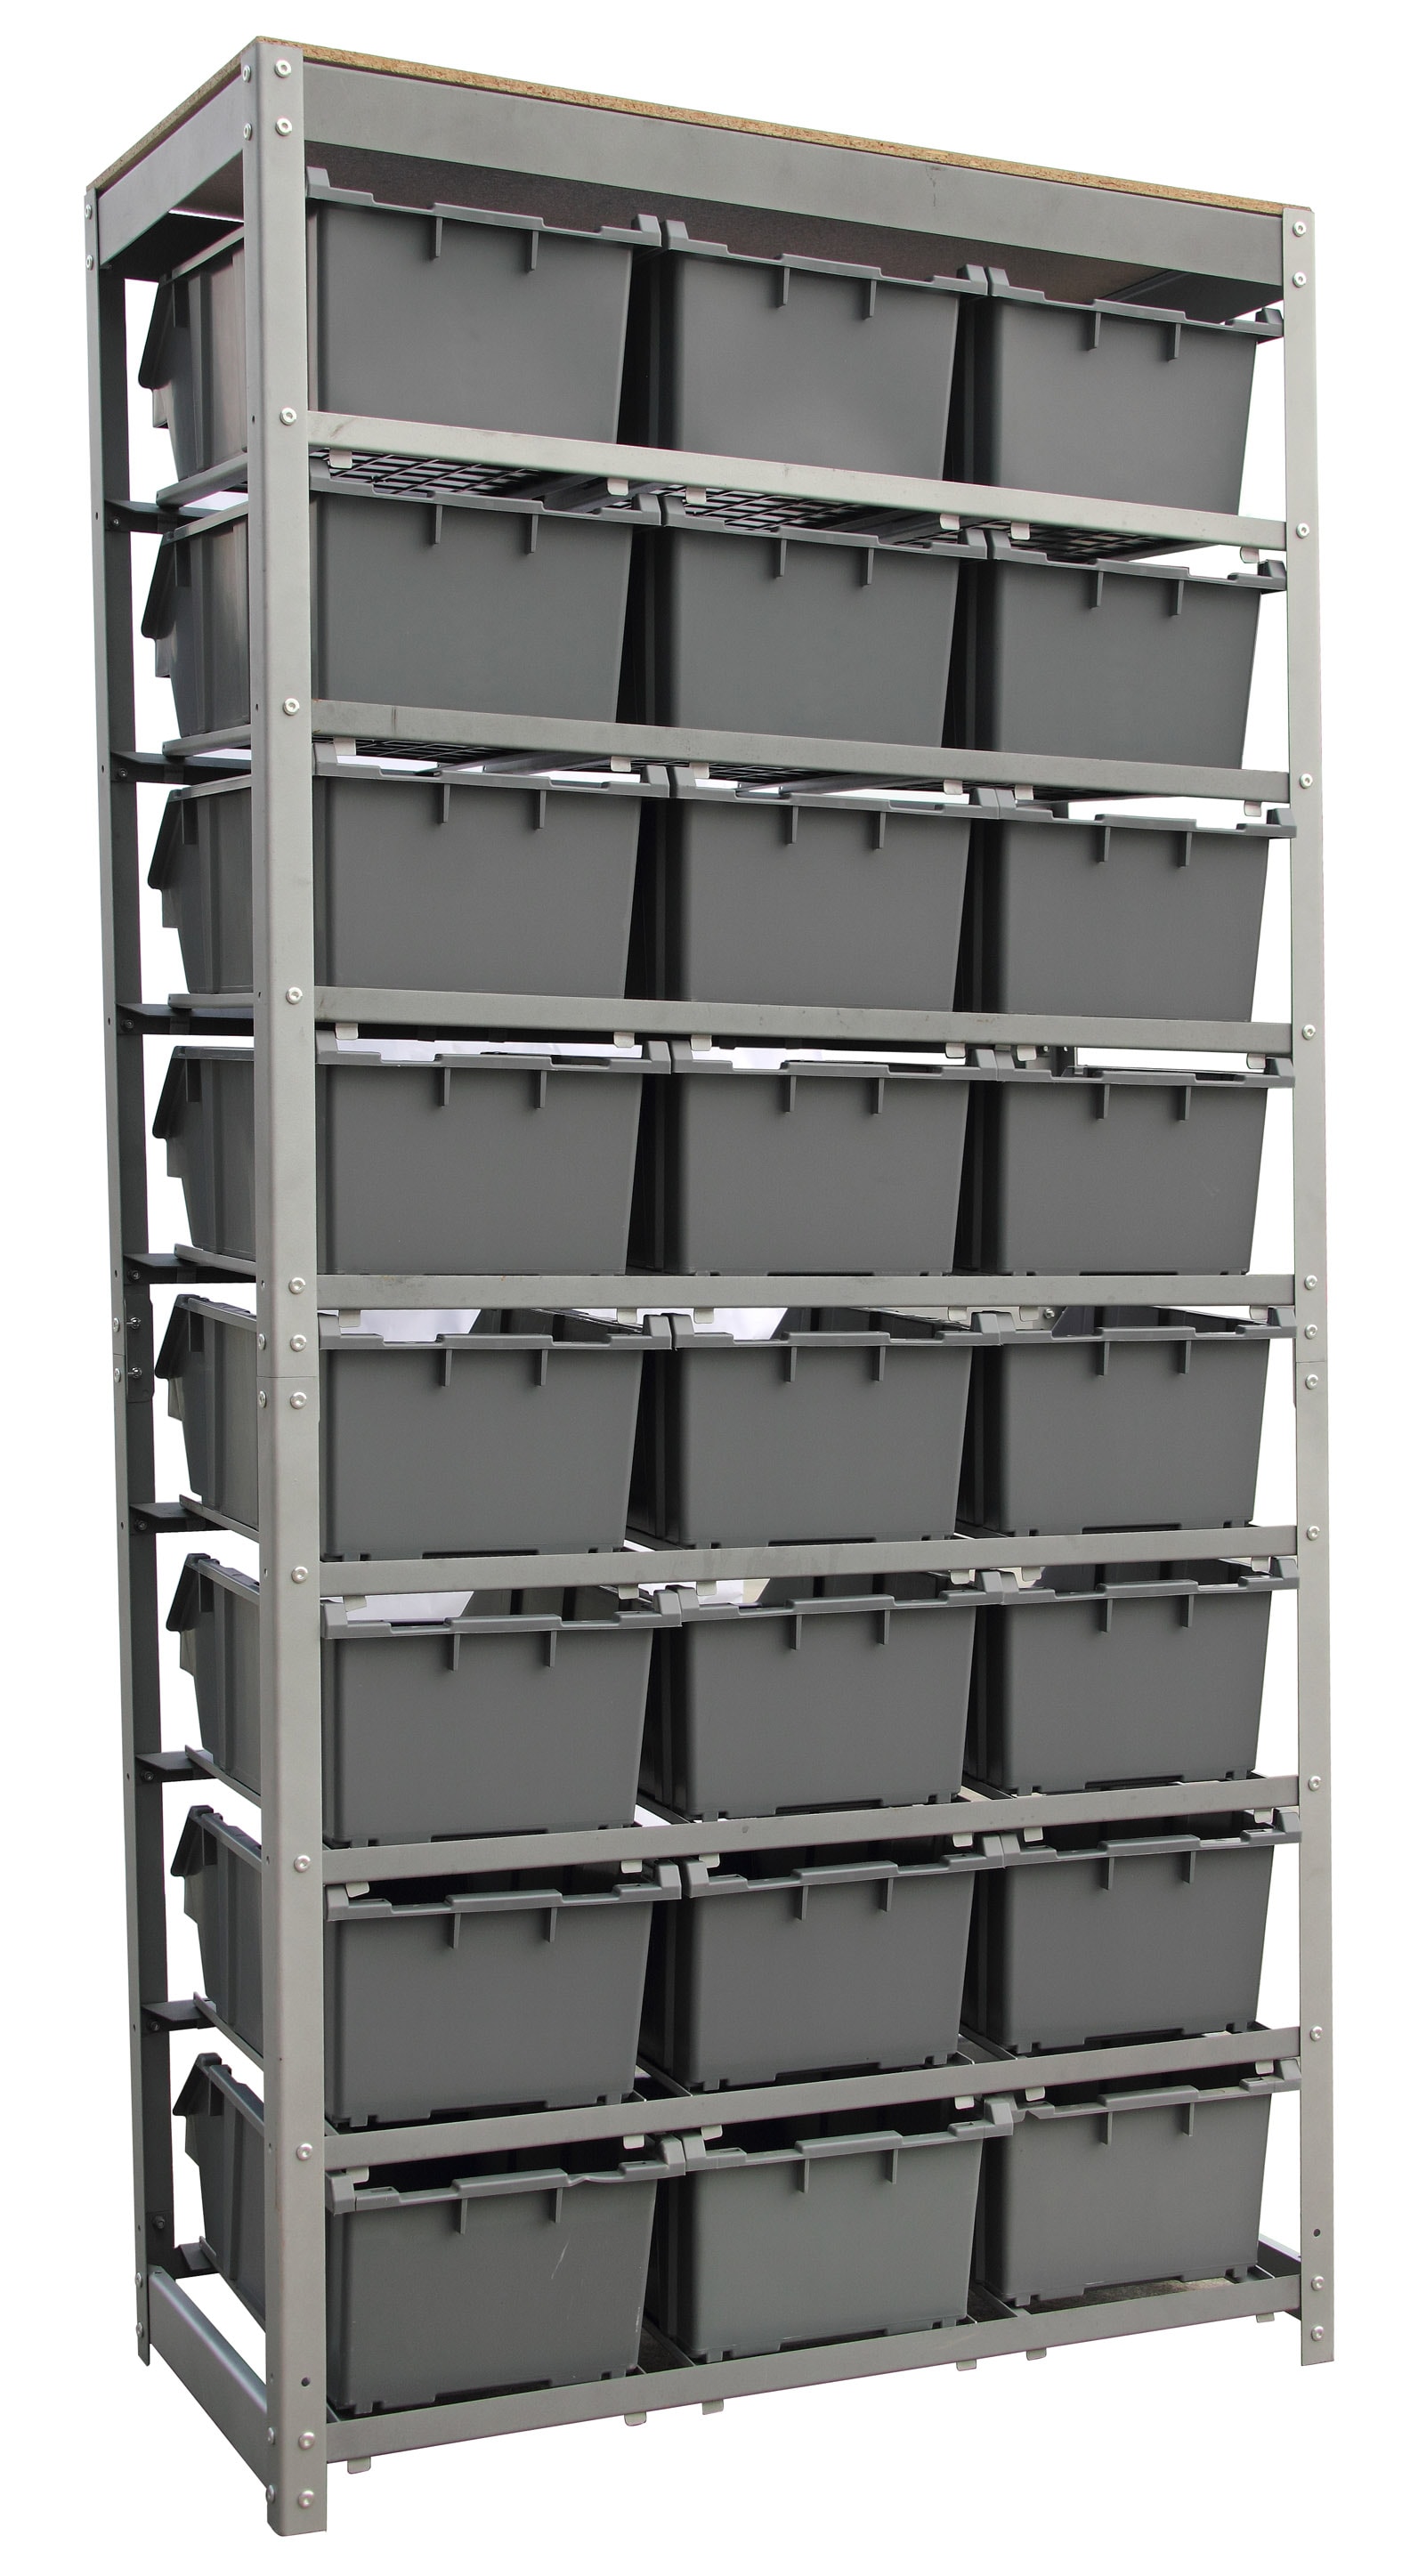 Jonnisha 33 W x 15 D x 48 H Garage Storage Bin Rack System Heavy Duty 6 Tiers 22 Bins Shelving Units Rebrilliant